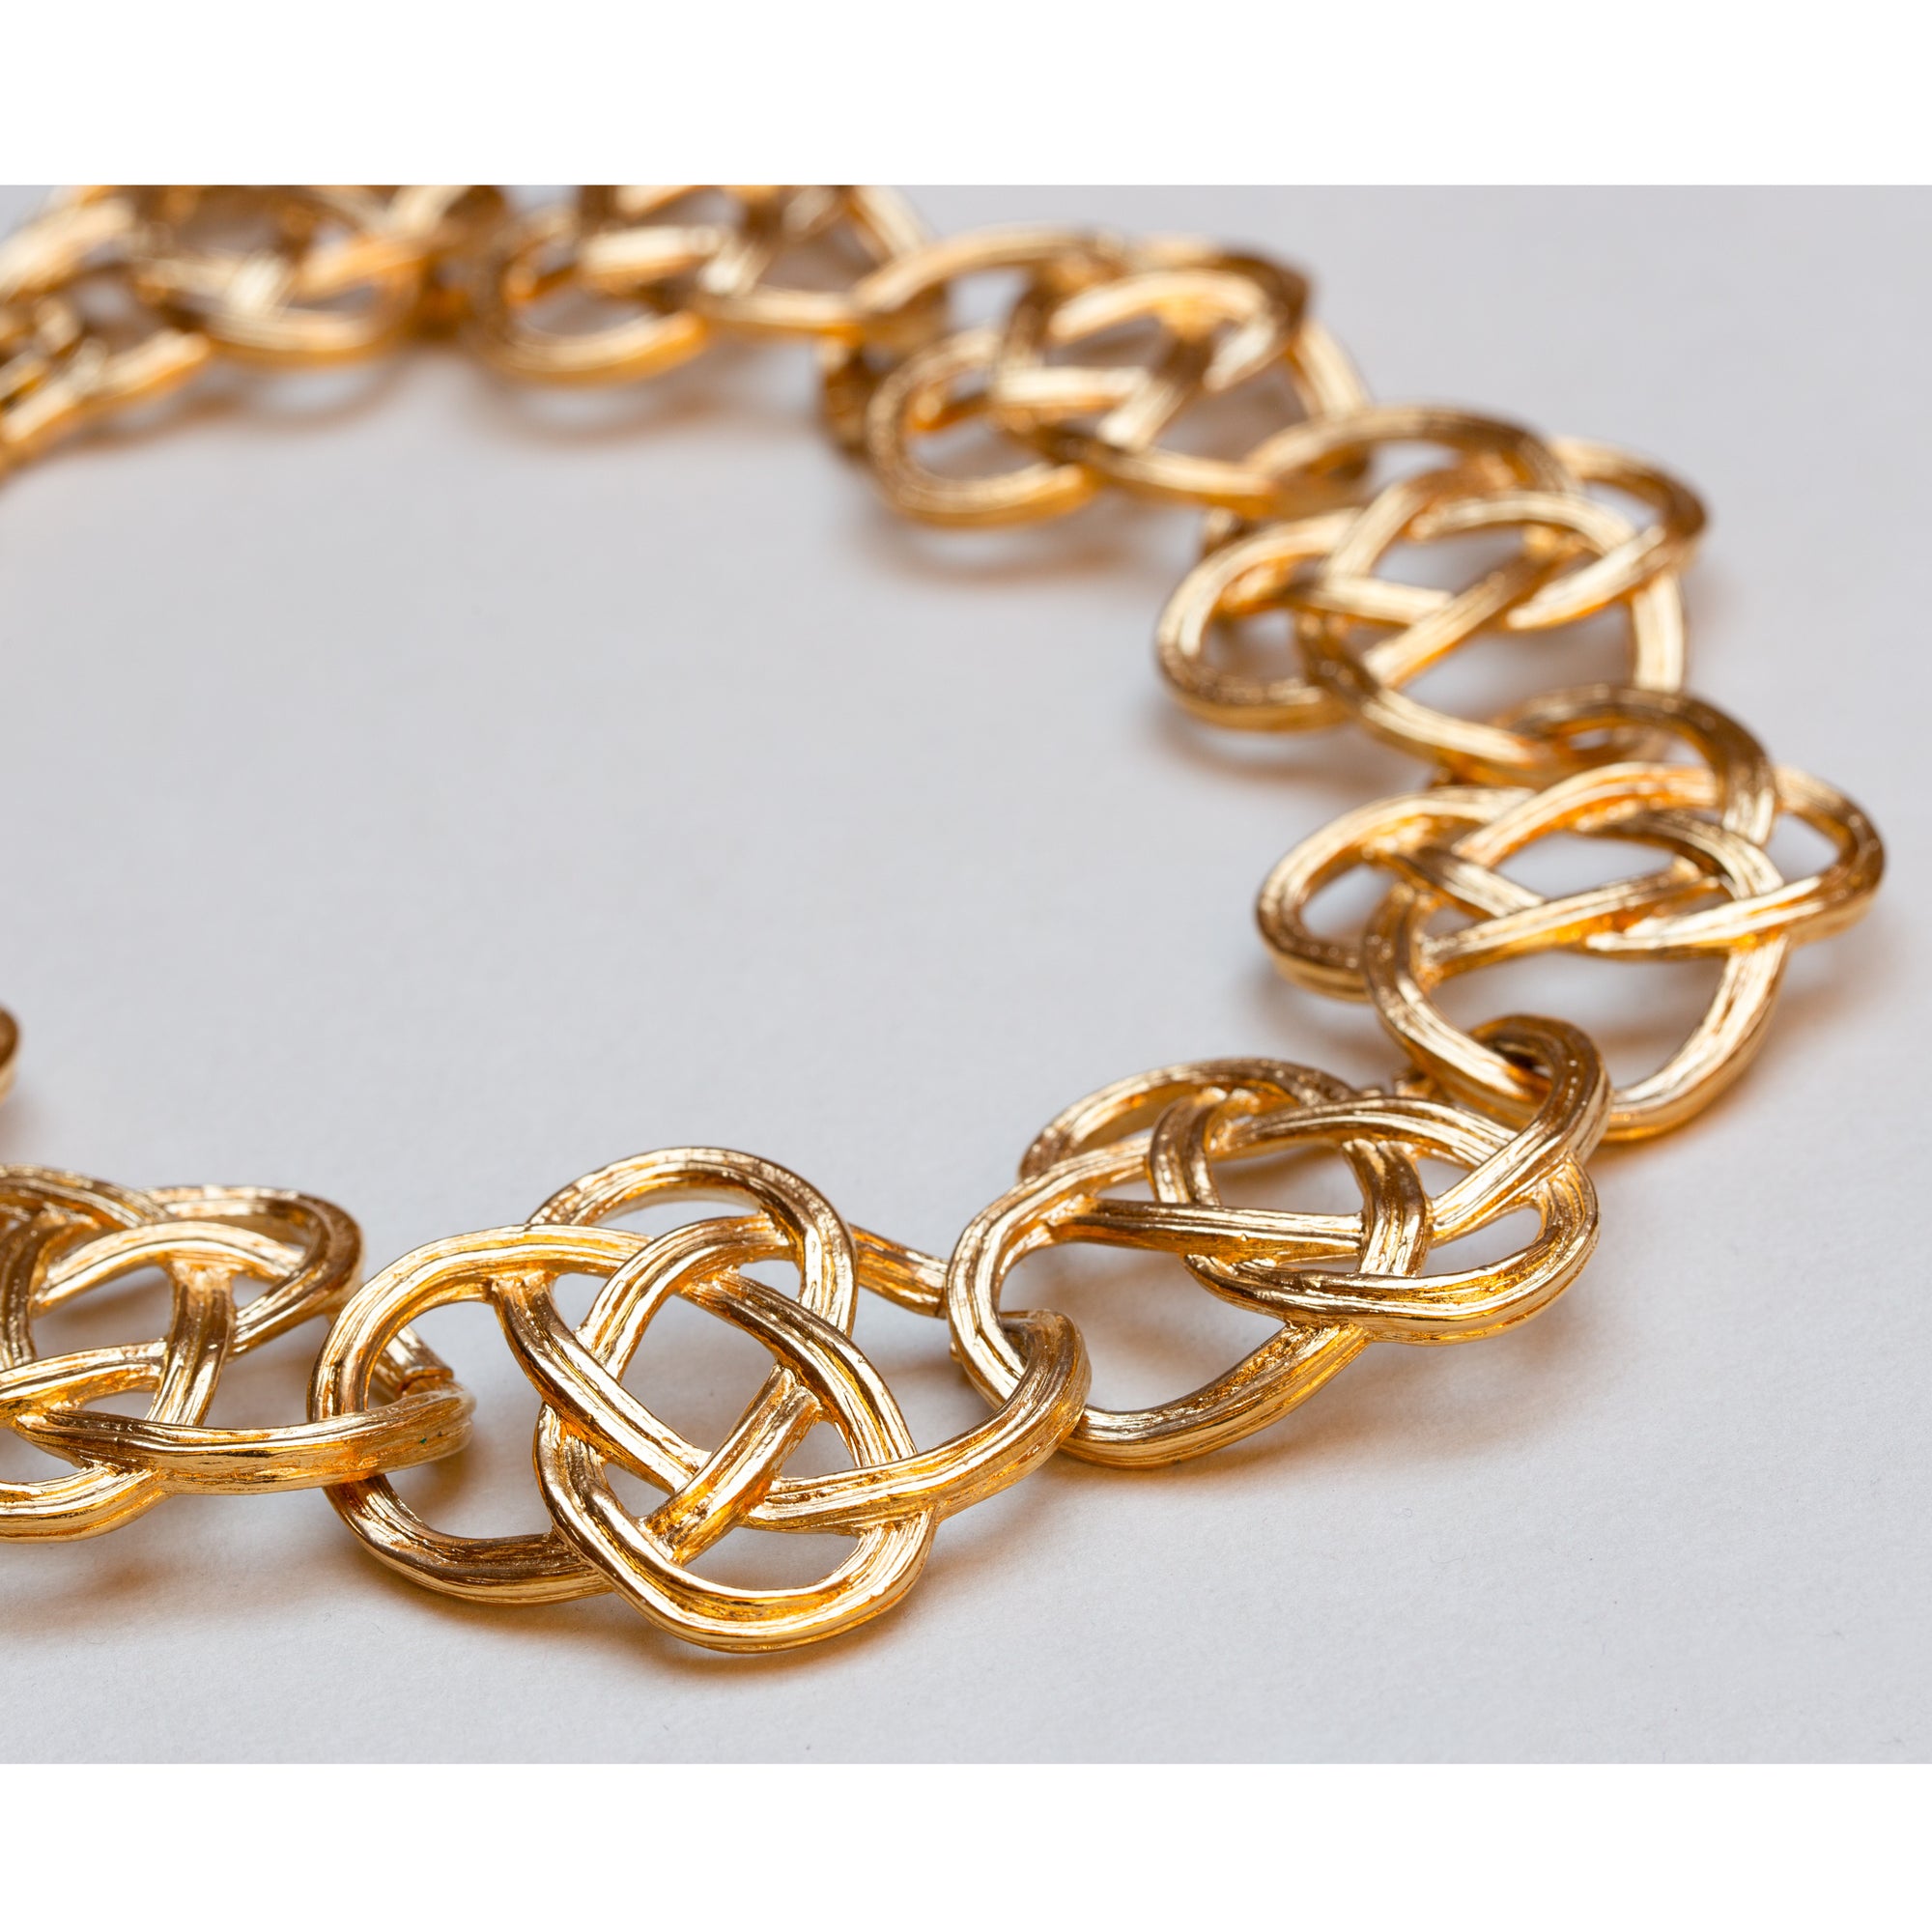 Vintage Givenchy Gold Mizuhiki Knot Chain Choker Necklace